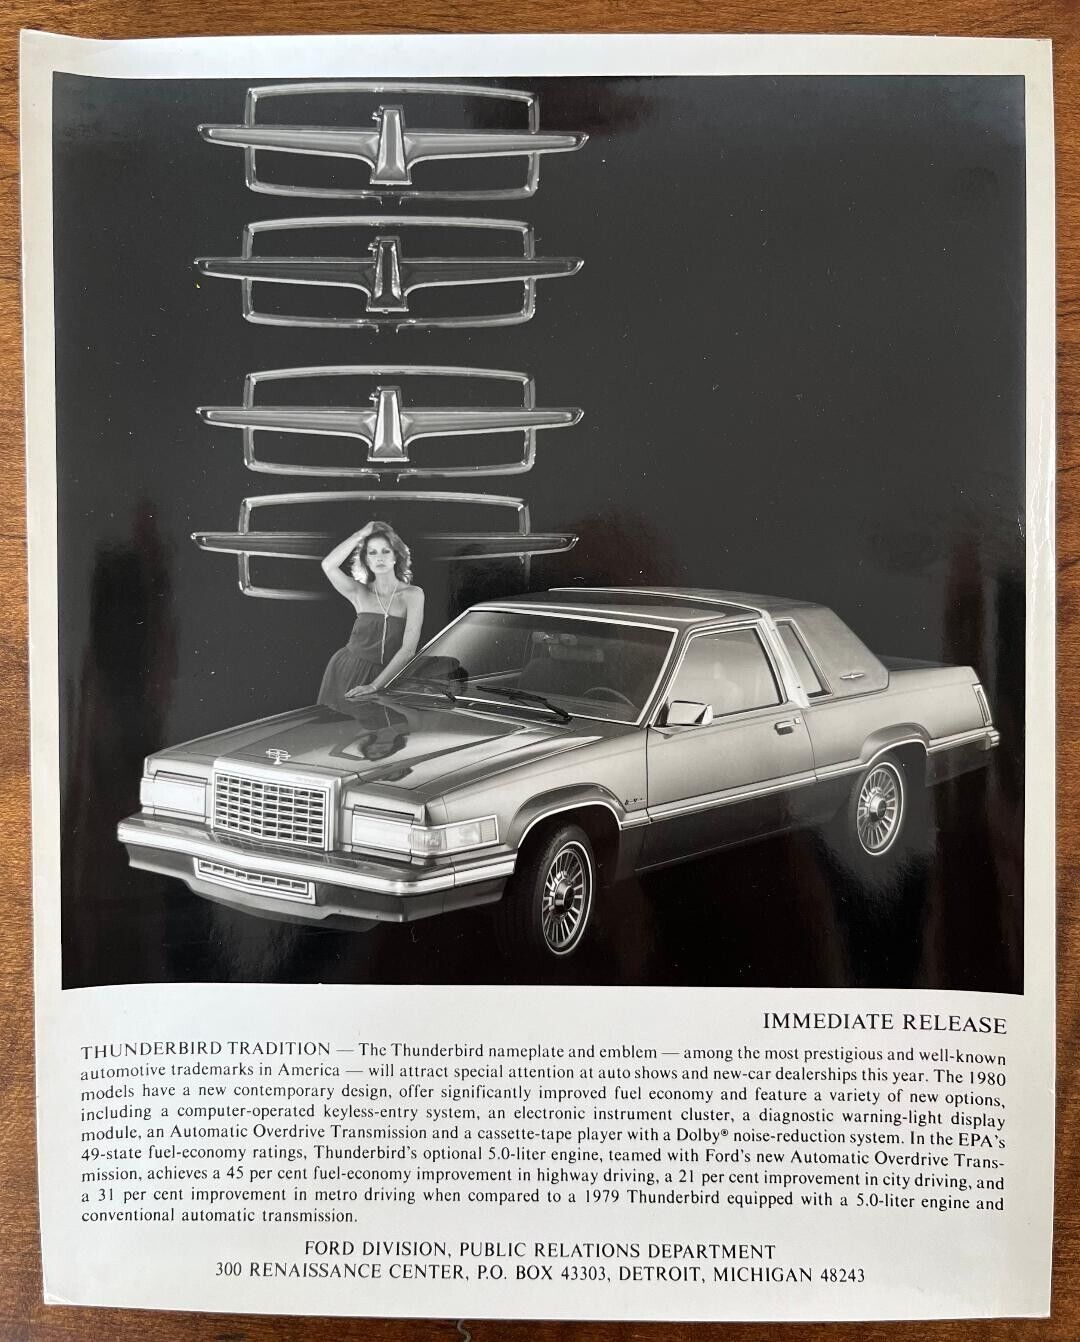 Original 1980 Ford Thunderbird Official Press Release Photo